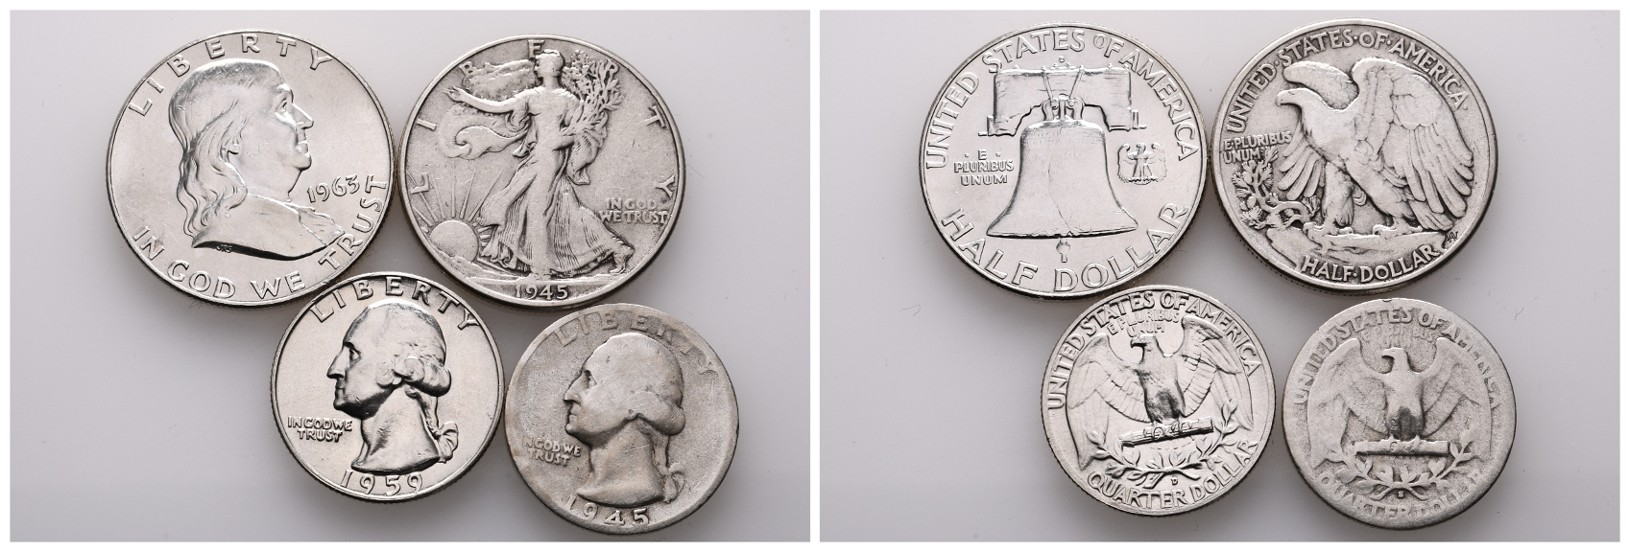  Linnartz USA Half Dollar 1963 D + Half Dollar 1945 + Quarter Dollar 1945 S + Quarter Dollar 1959 D   